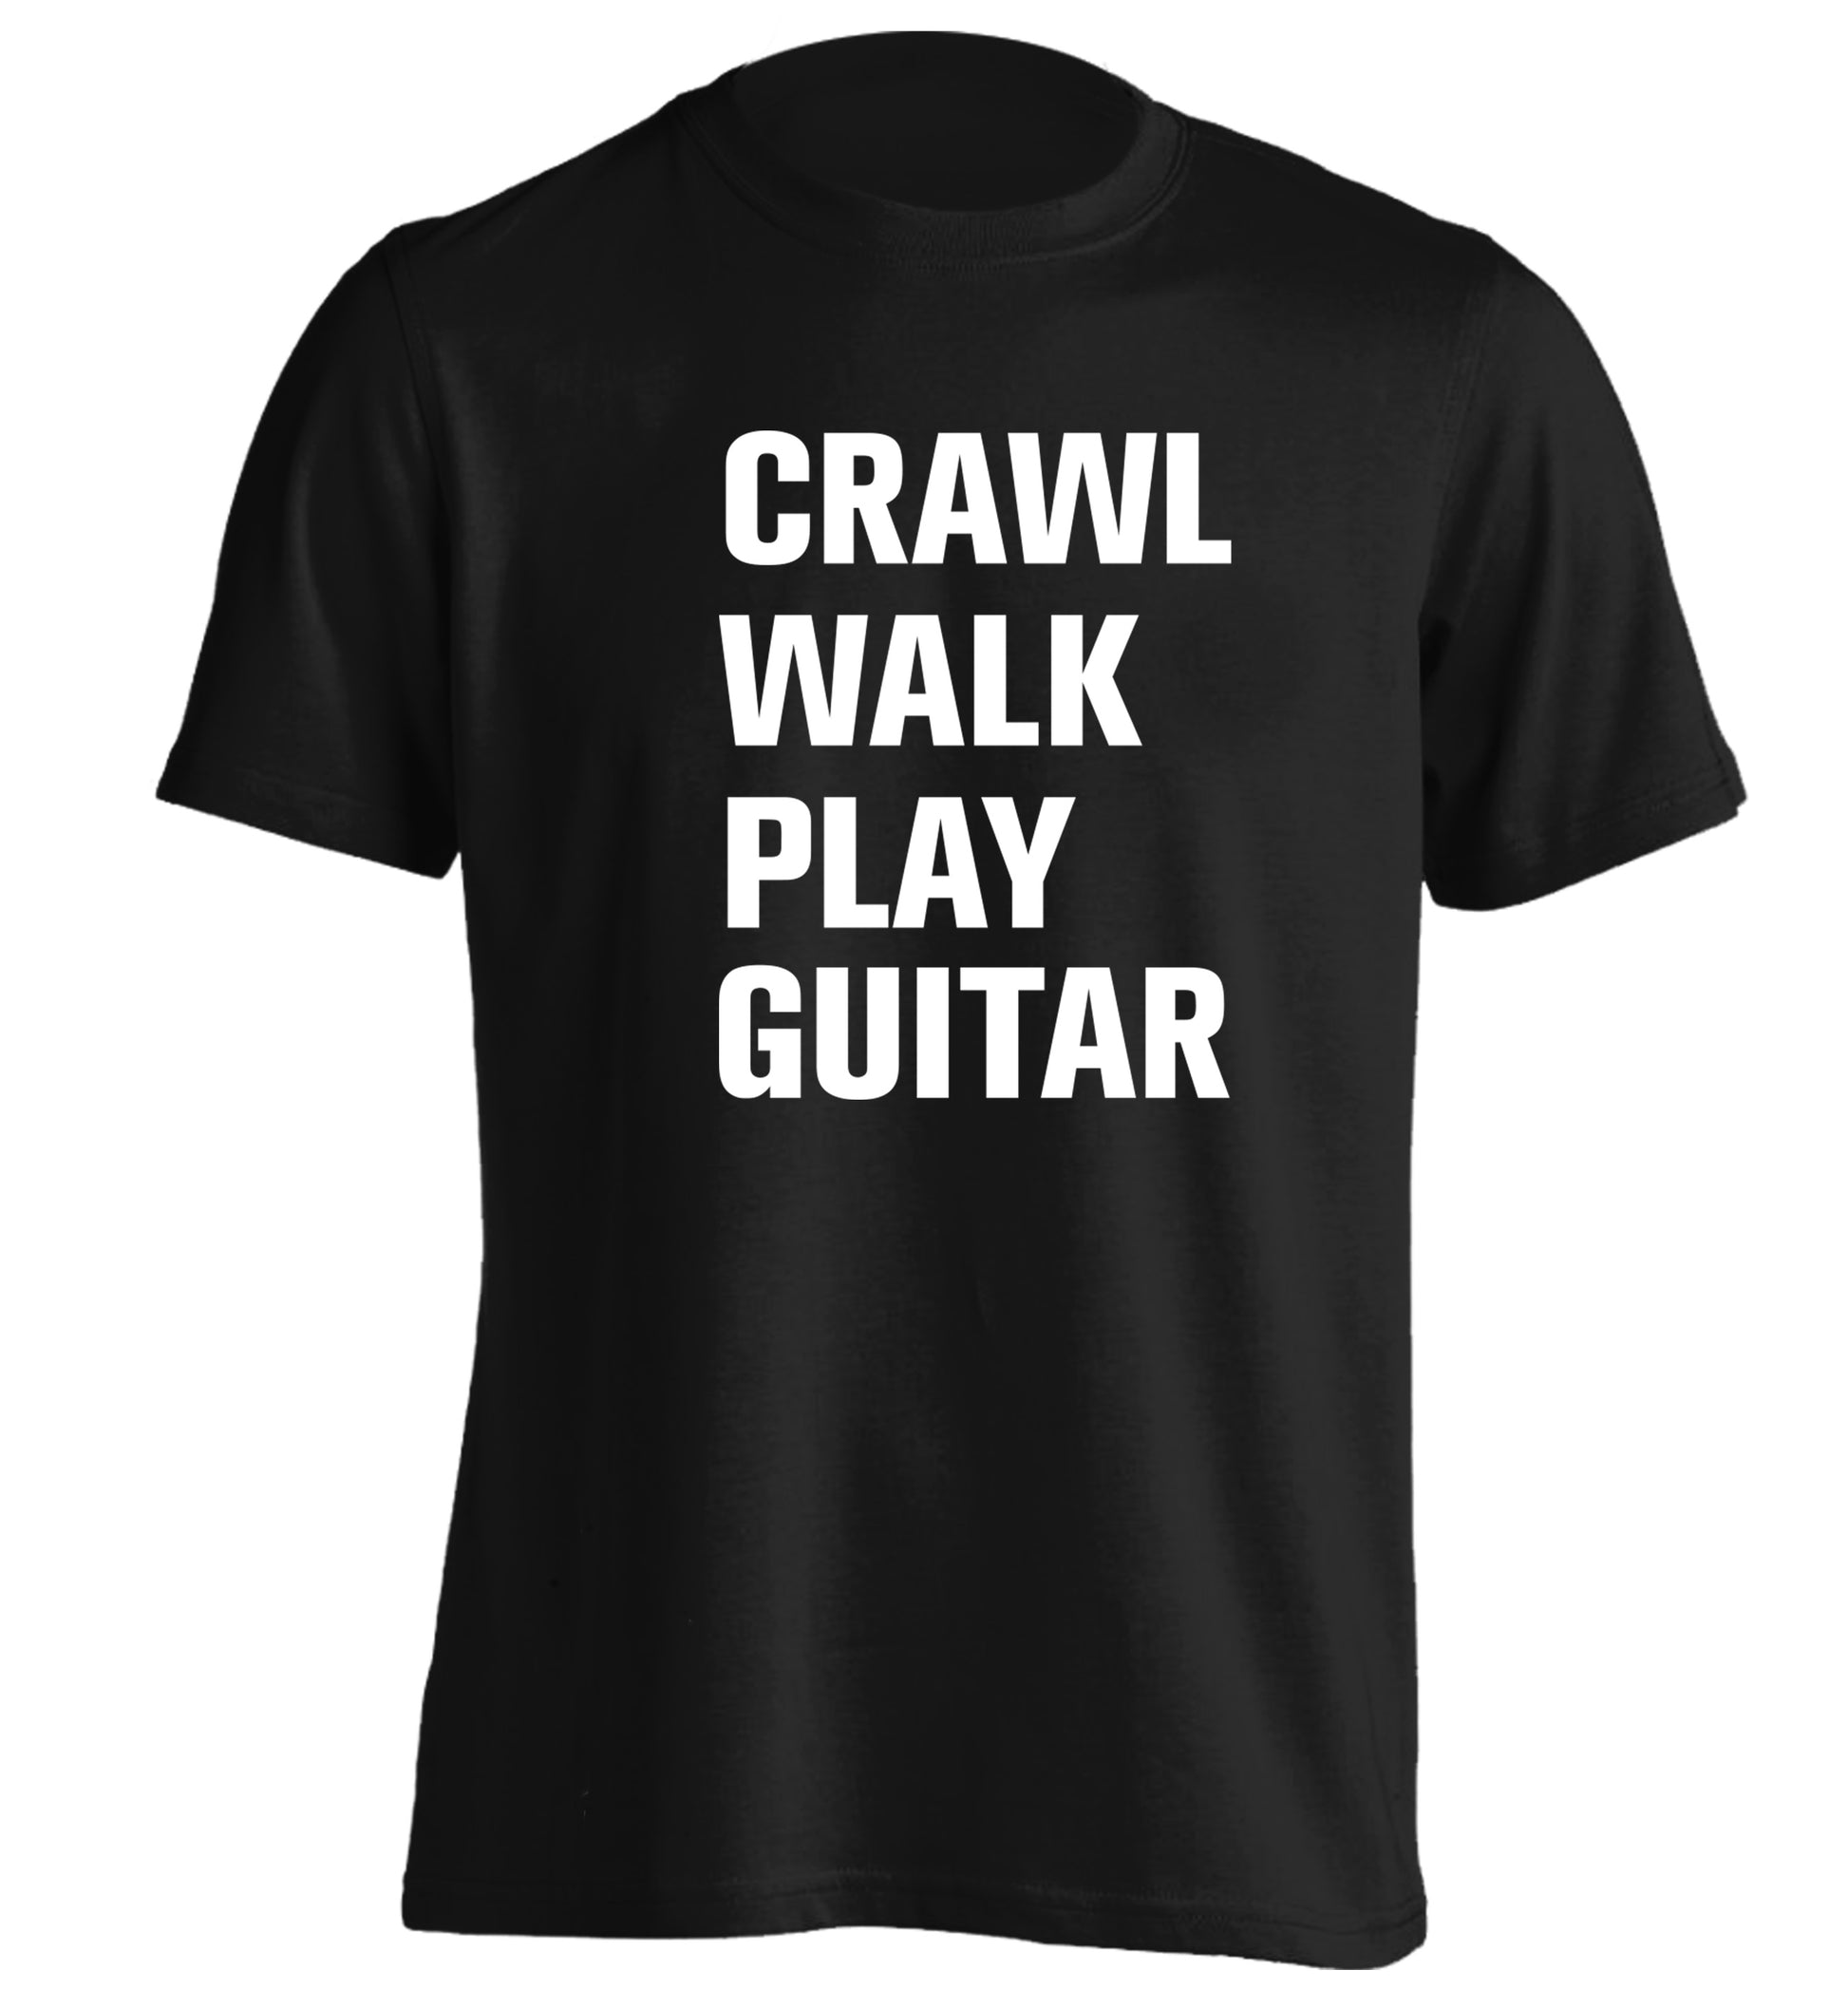 Crawl walk play guitar adults unisex black Tshirt 2XL